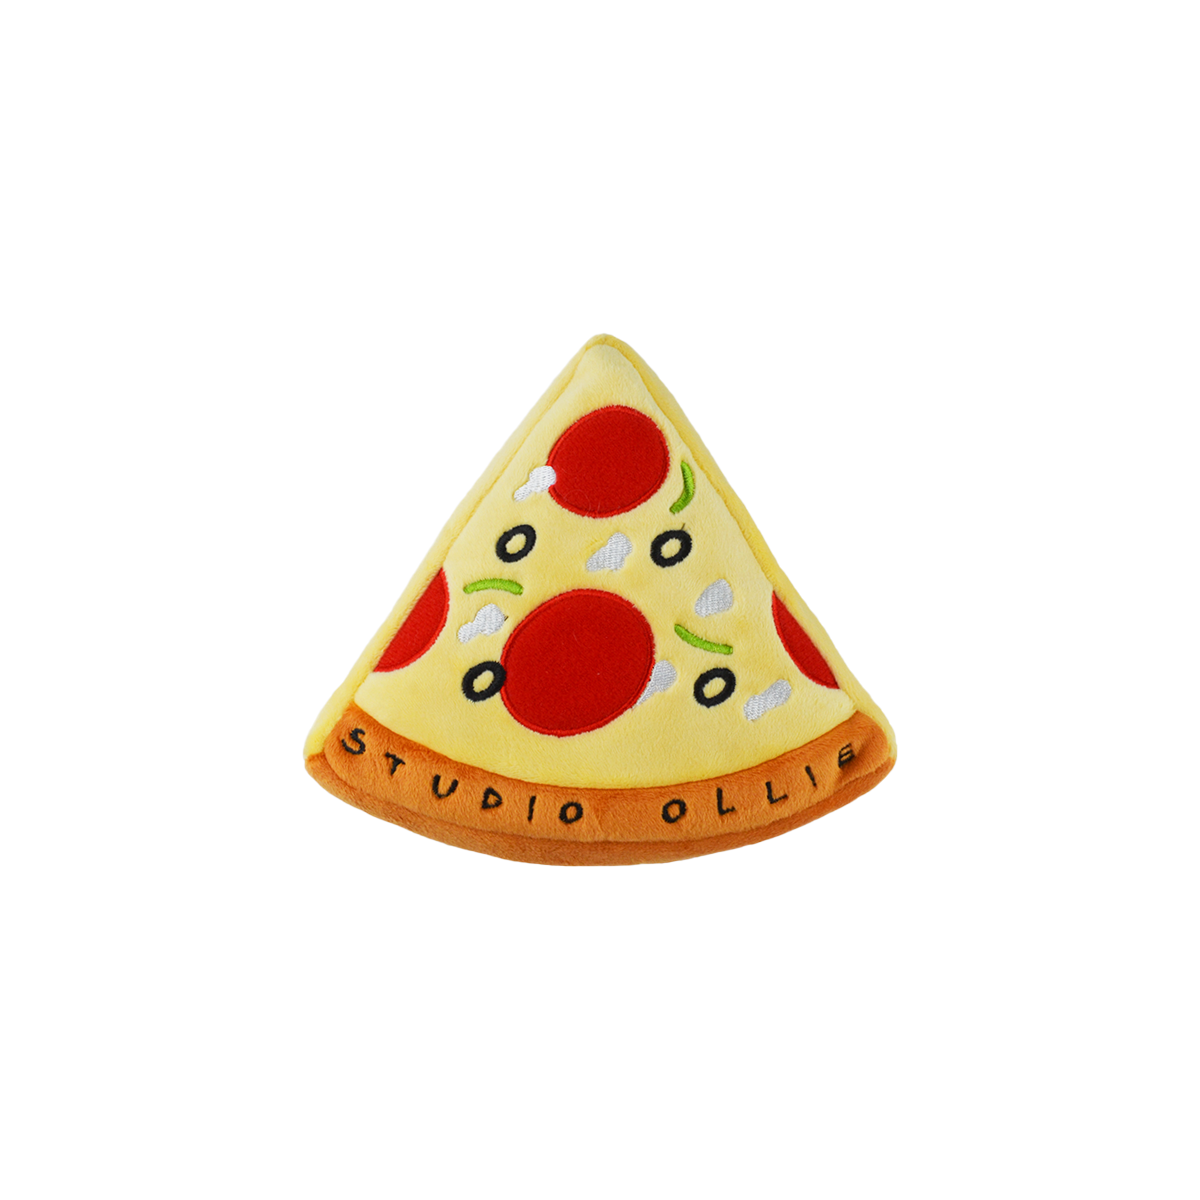 Studio Ollie - Pepperoni Pizza Toy - Henlo Pets